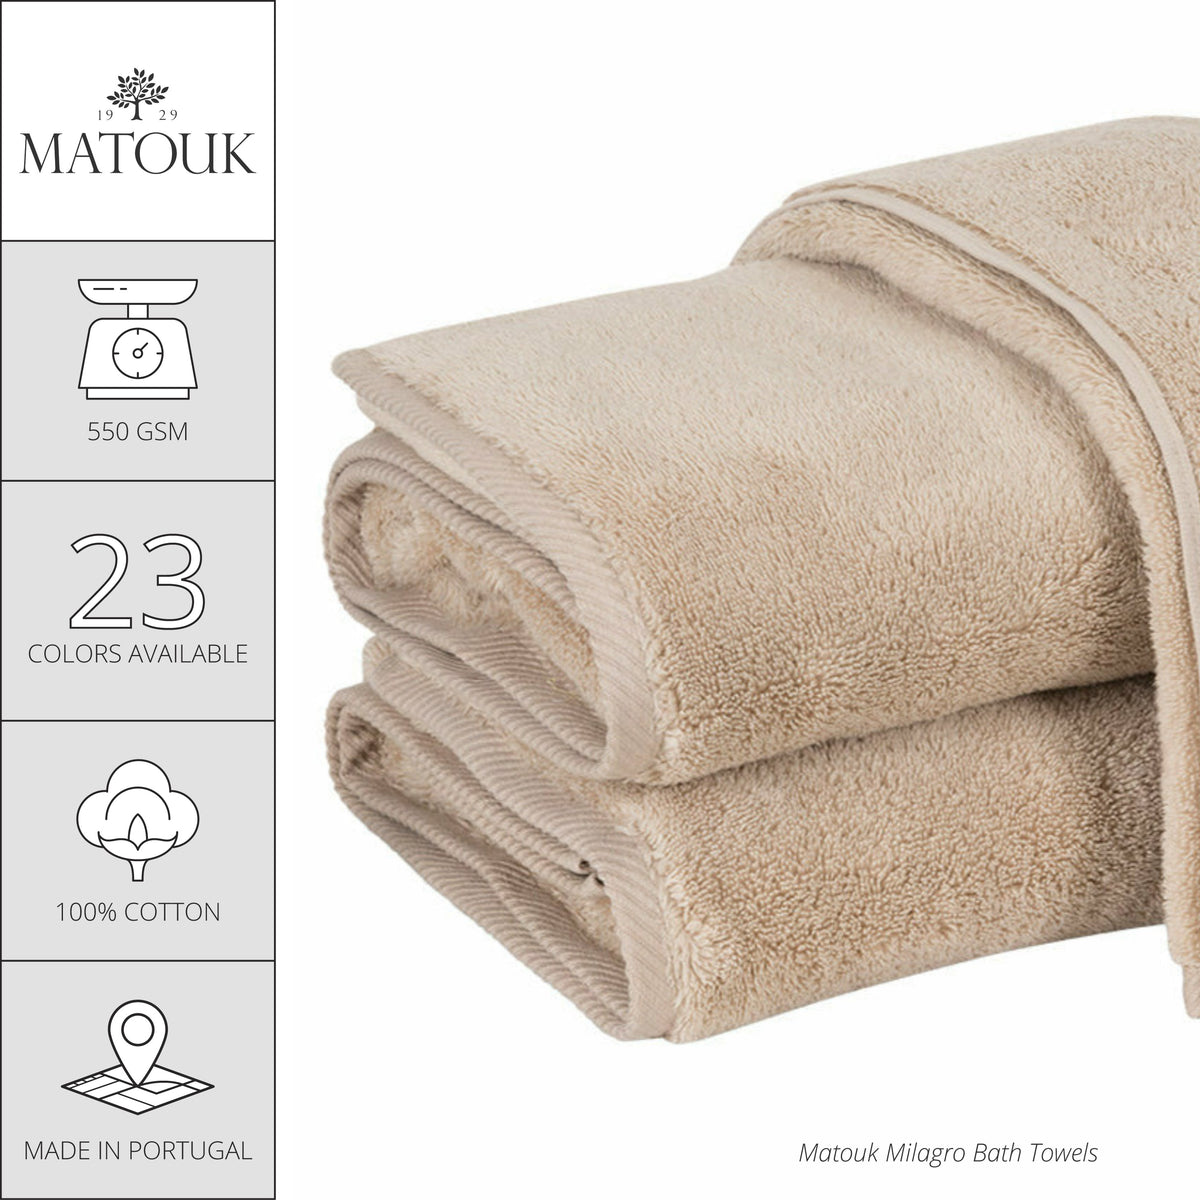 Matouk Milagro Bath Towels and Mats - Azure